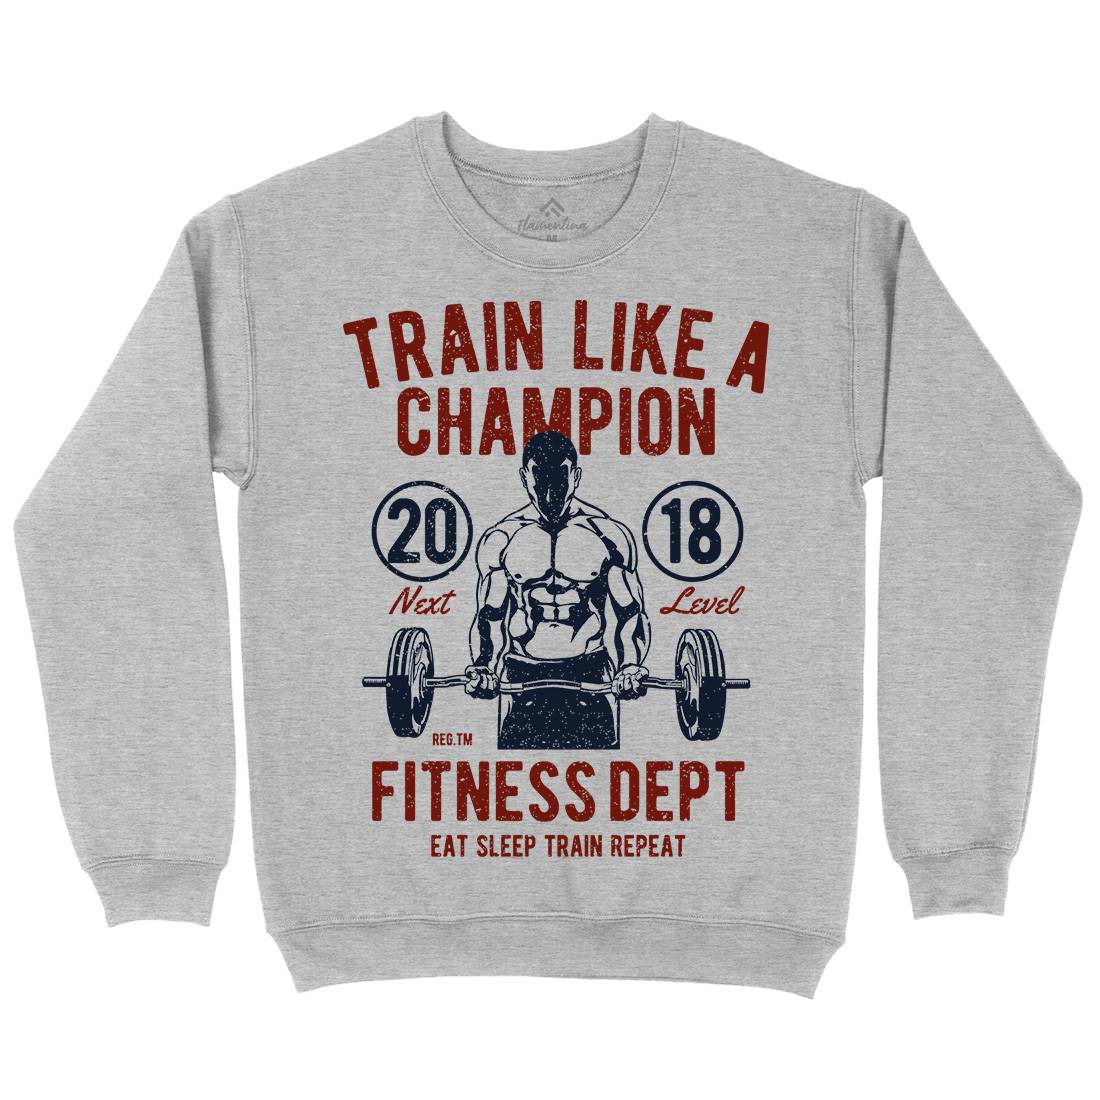 Train Like A Champion Kids Crew Neck Sweatshirt Gym A779